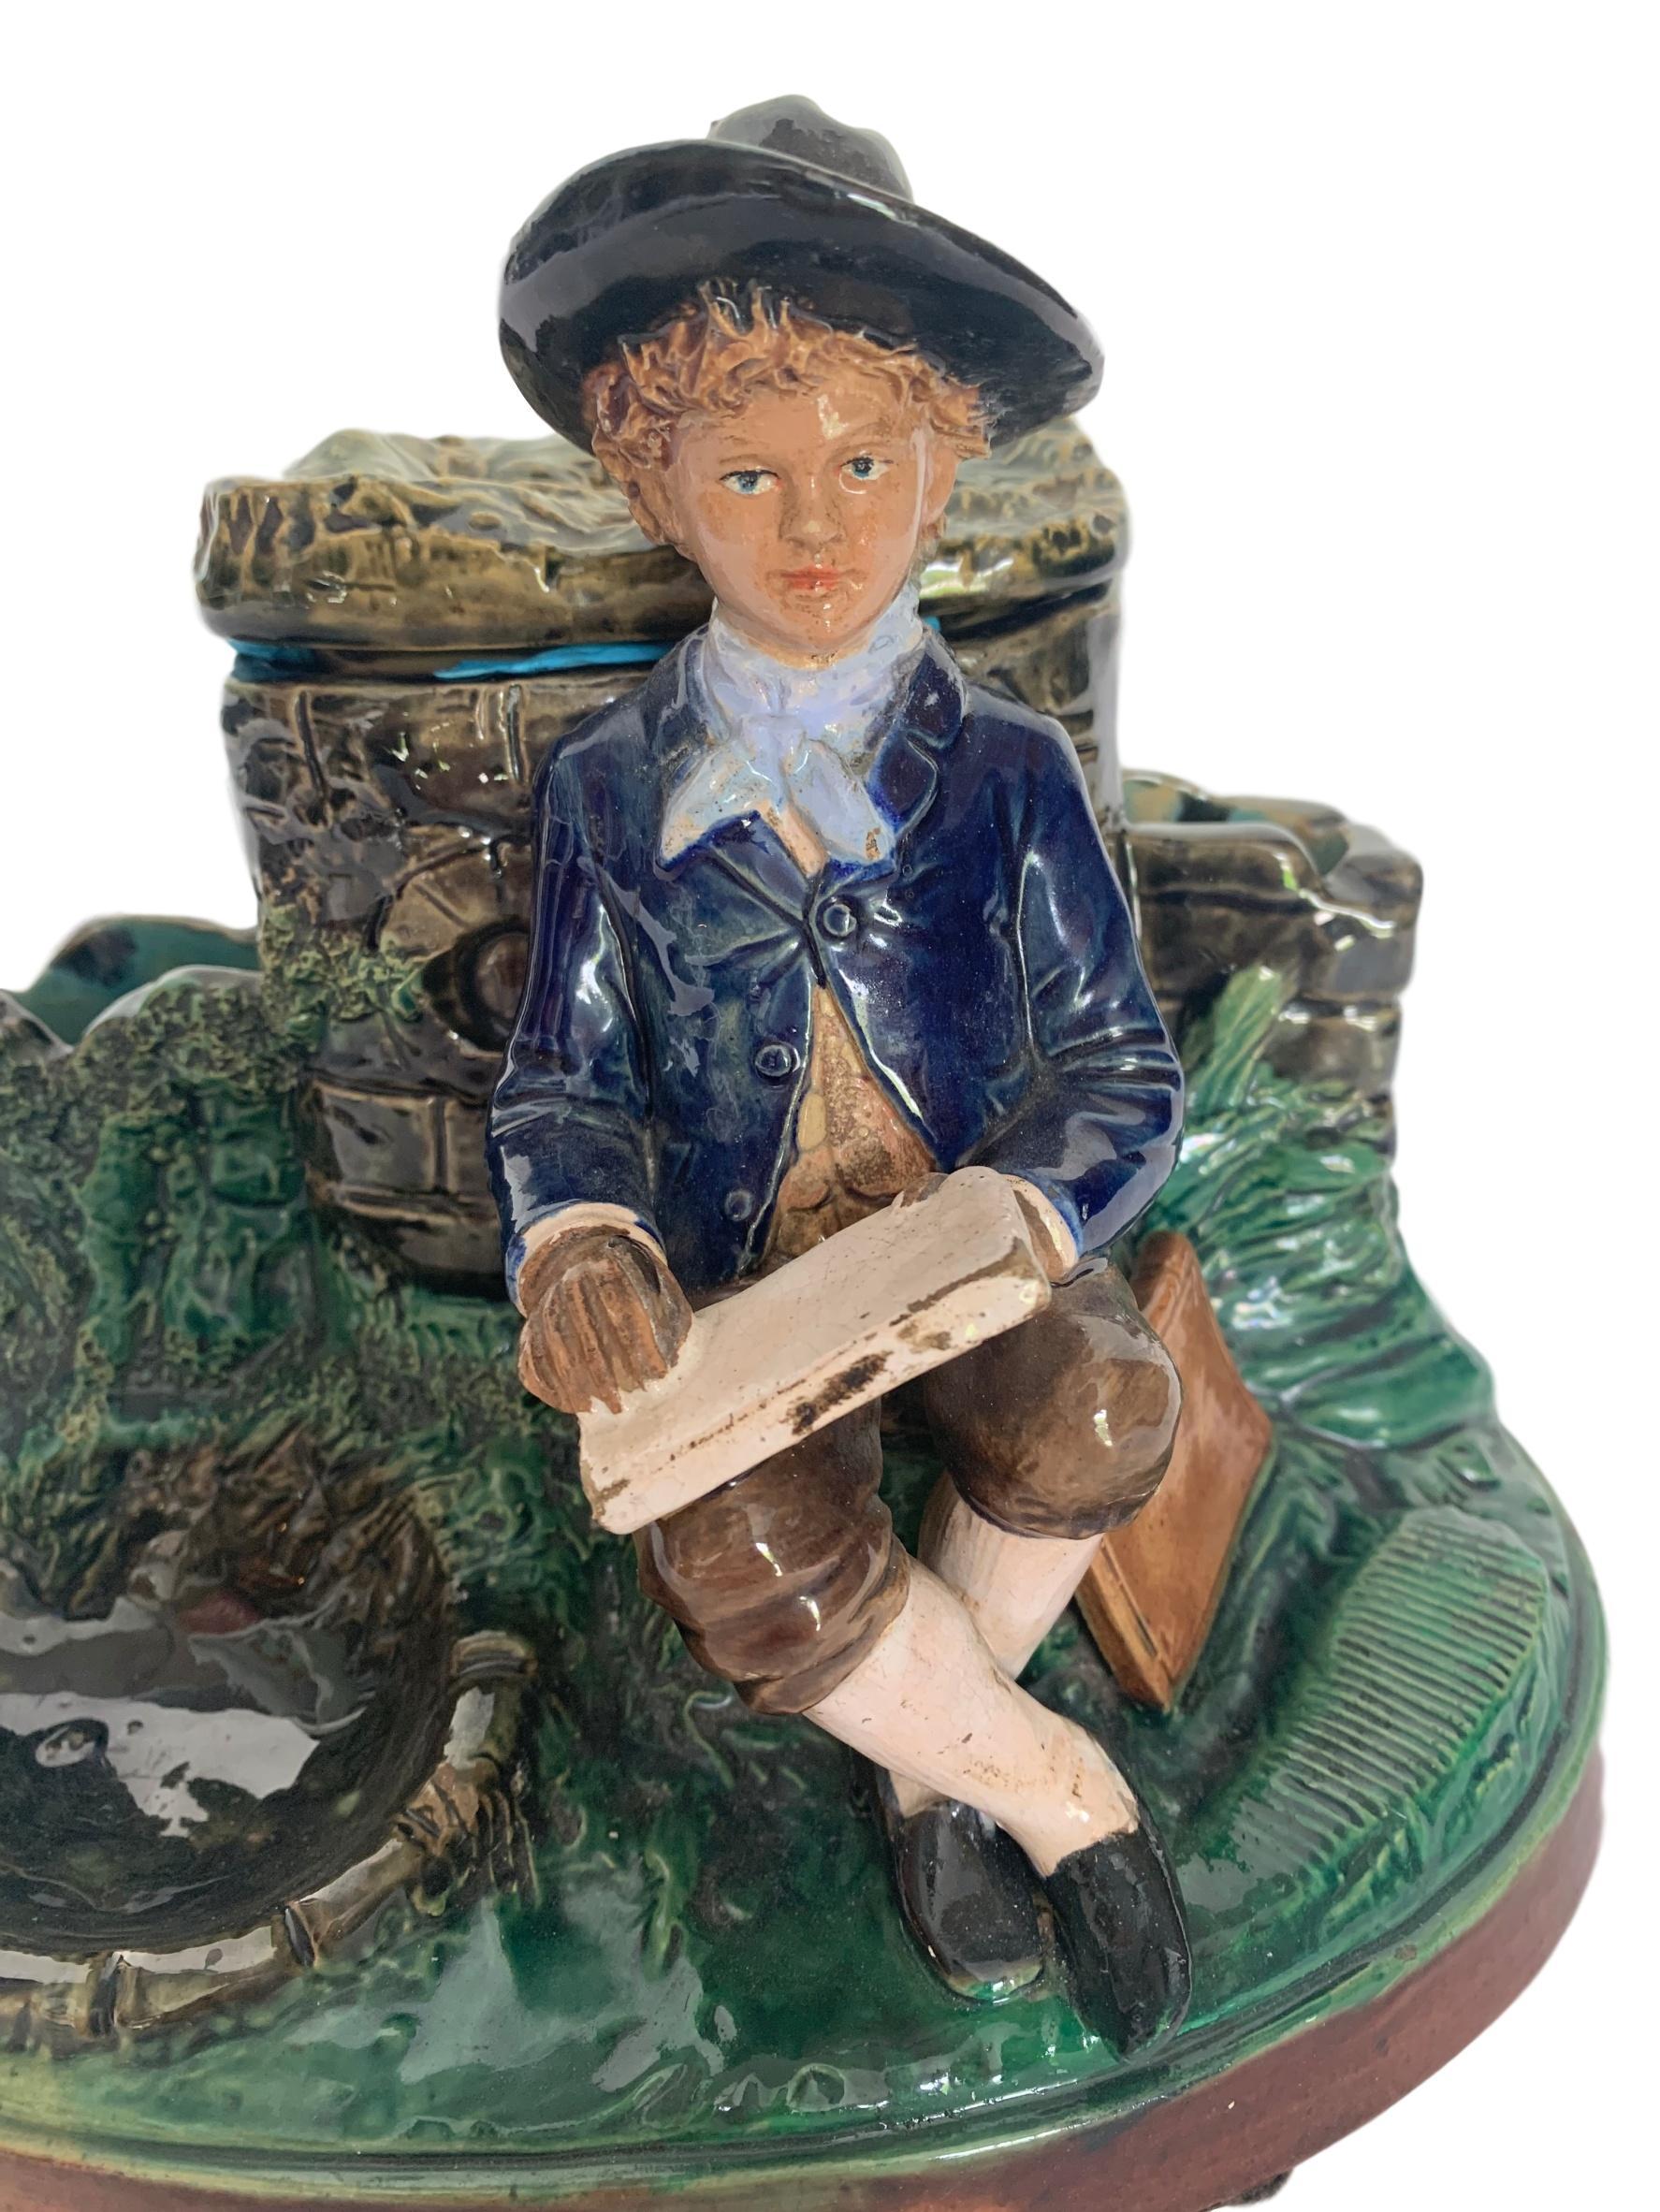 Ceramic Very Rare German Majolica Humidor, Boy with Books, circa 1880 by B. Block & Co.